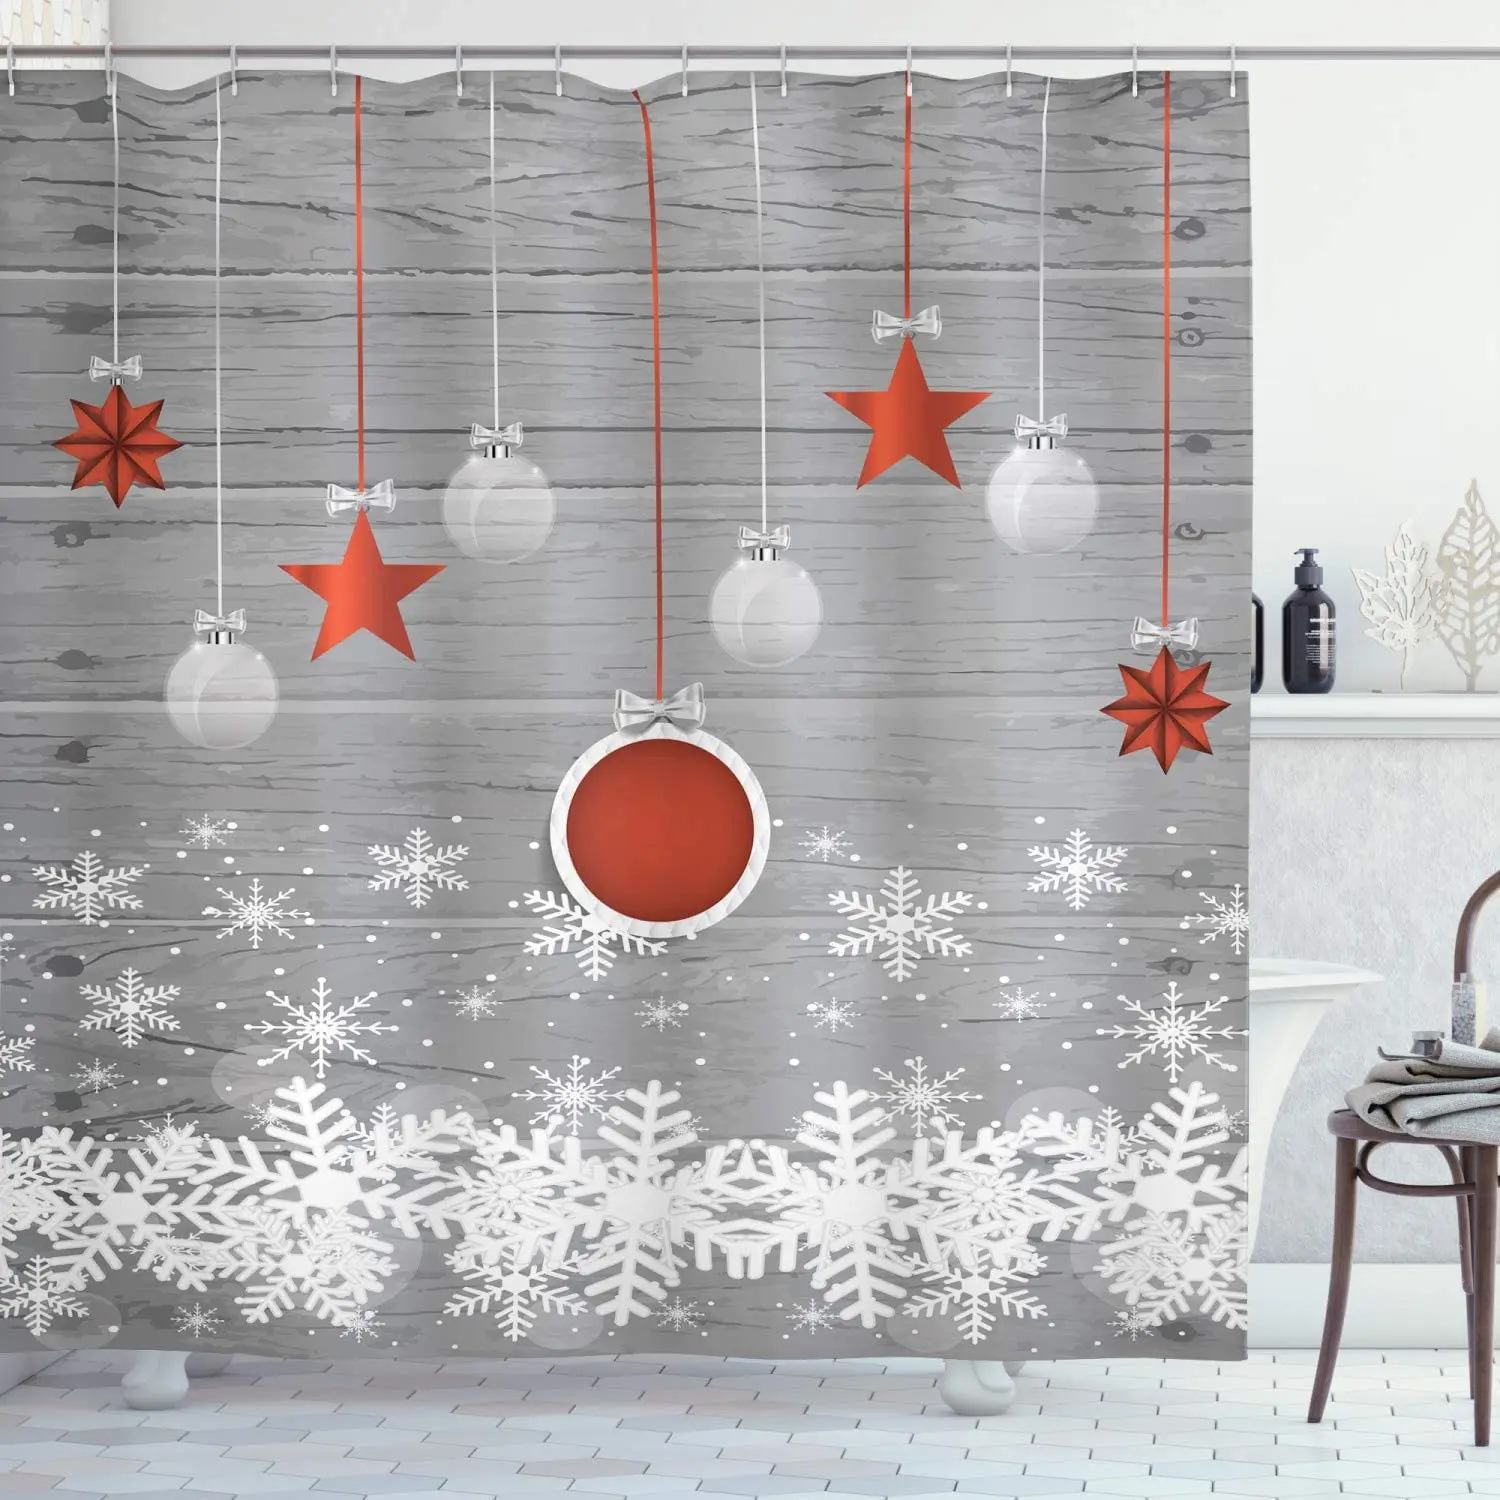 

Christmas Shower Curtains Cloth Washable Fabric Xmas Bathroom Decor Set with Hooks Pendant Stars Baubles Bathtub Home Decor